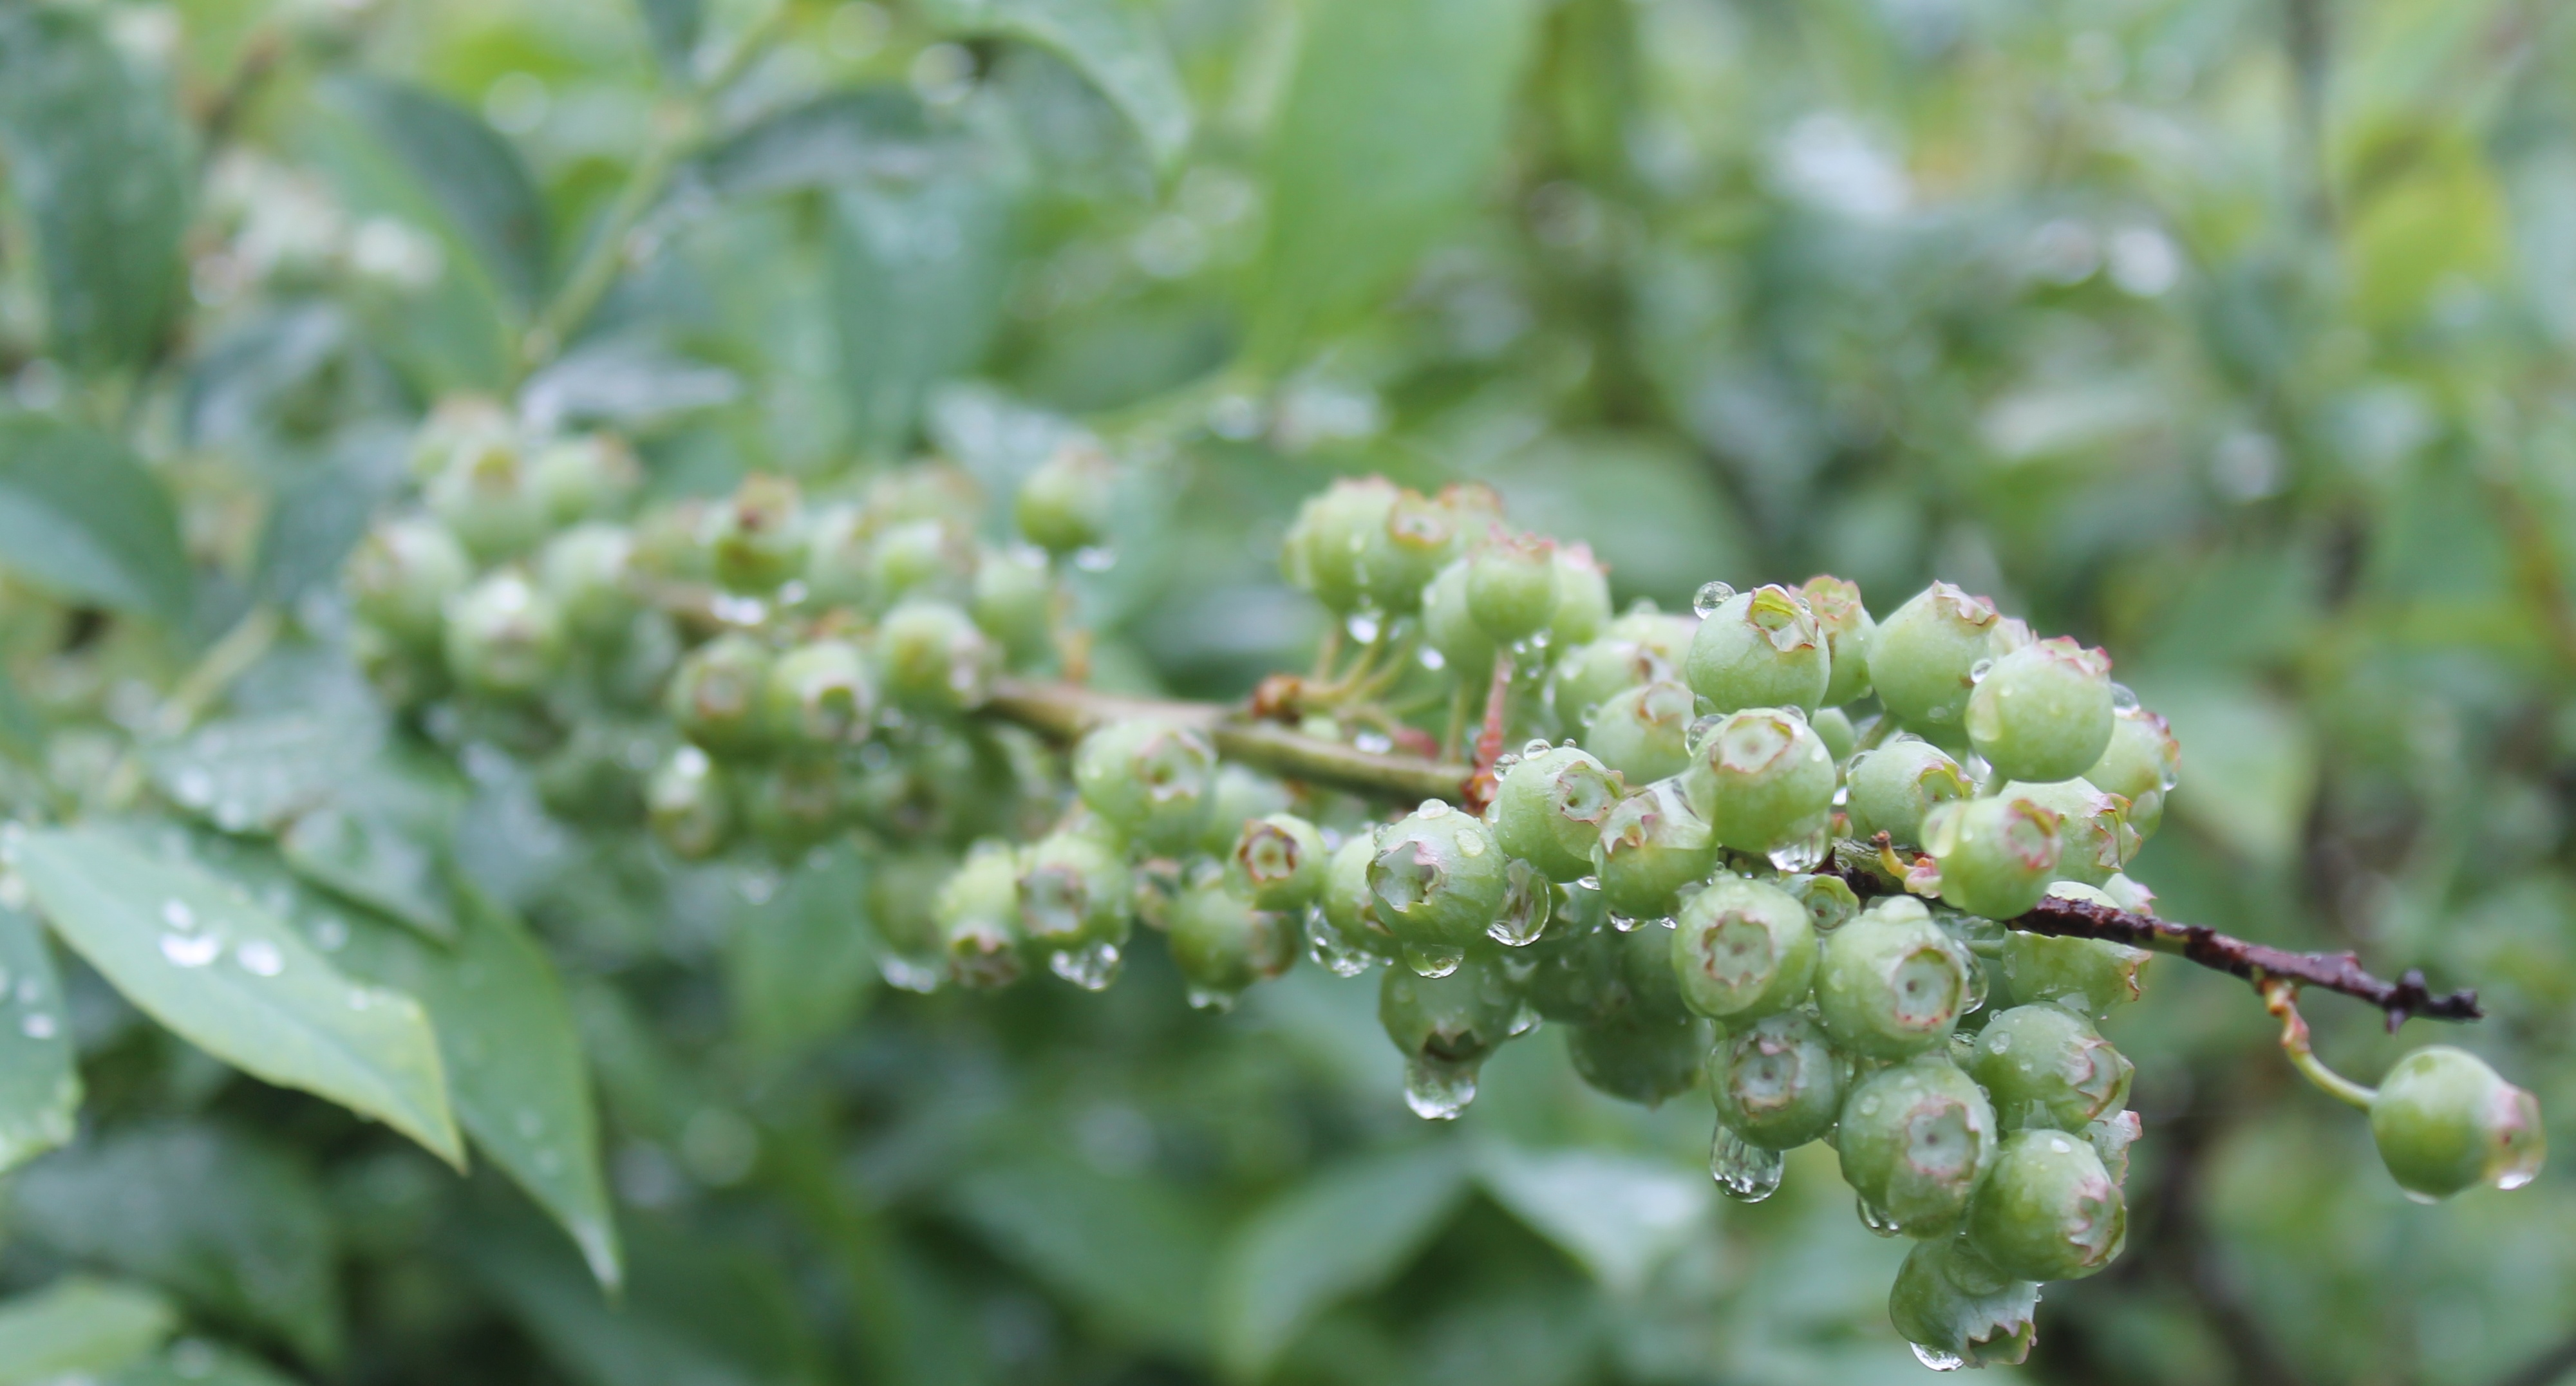  Unripe Blueberries - Image Credit Matthew Orwat